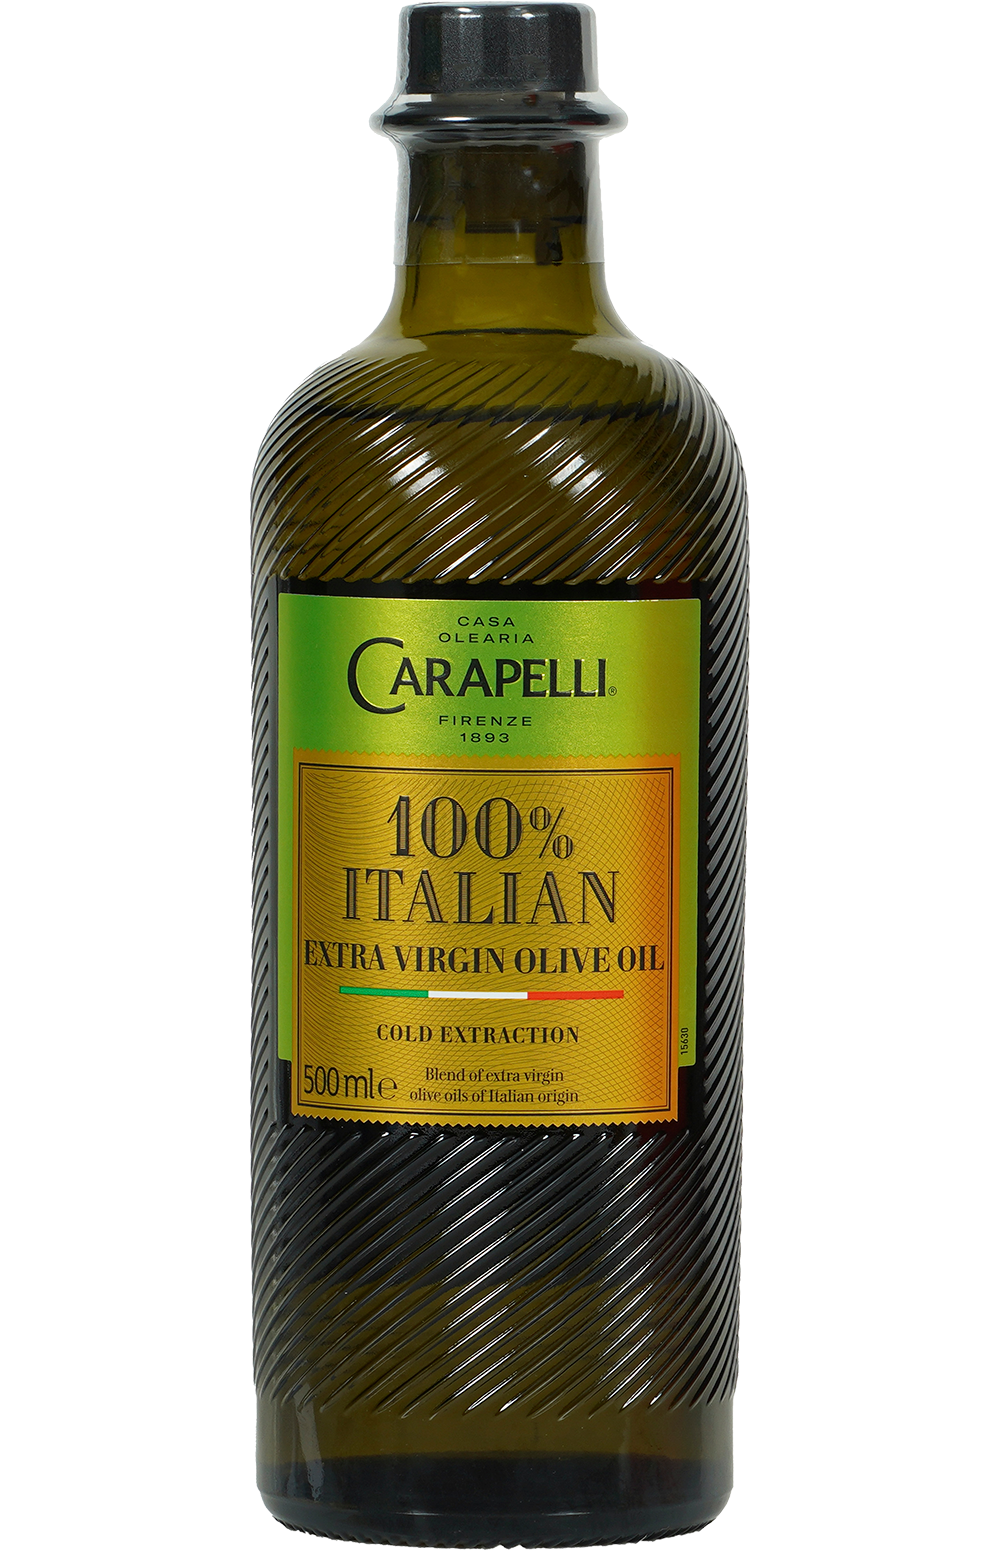 Carapelli Name SKU: 100% Italian